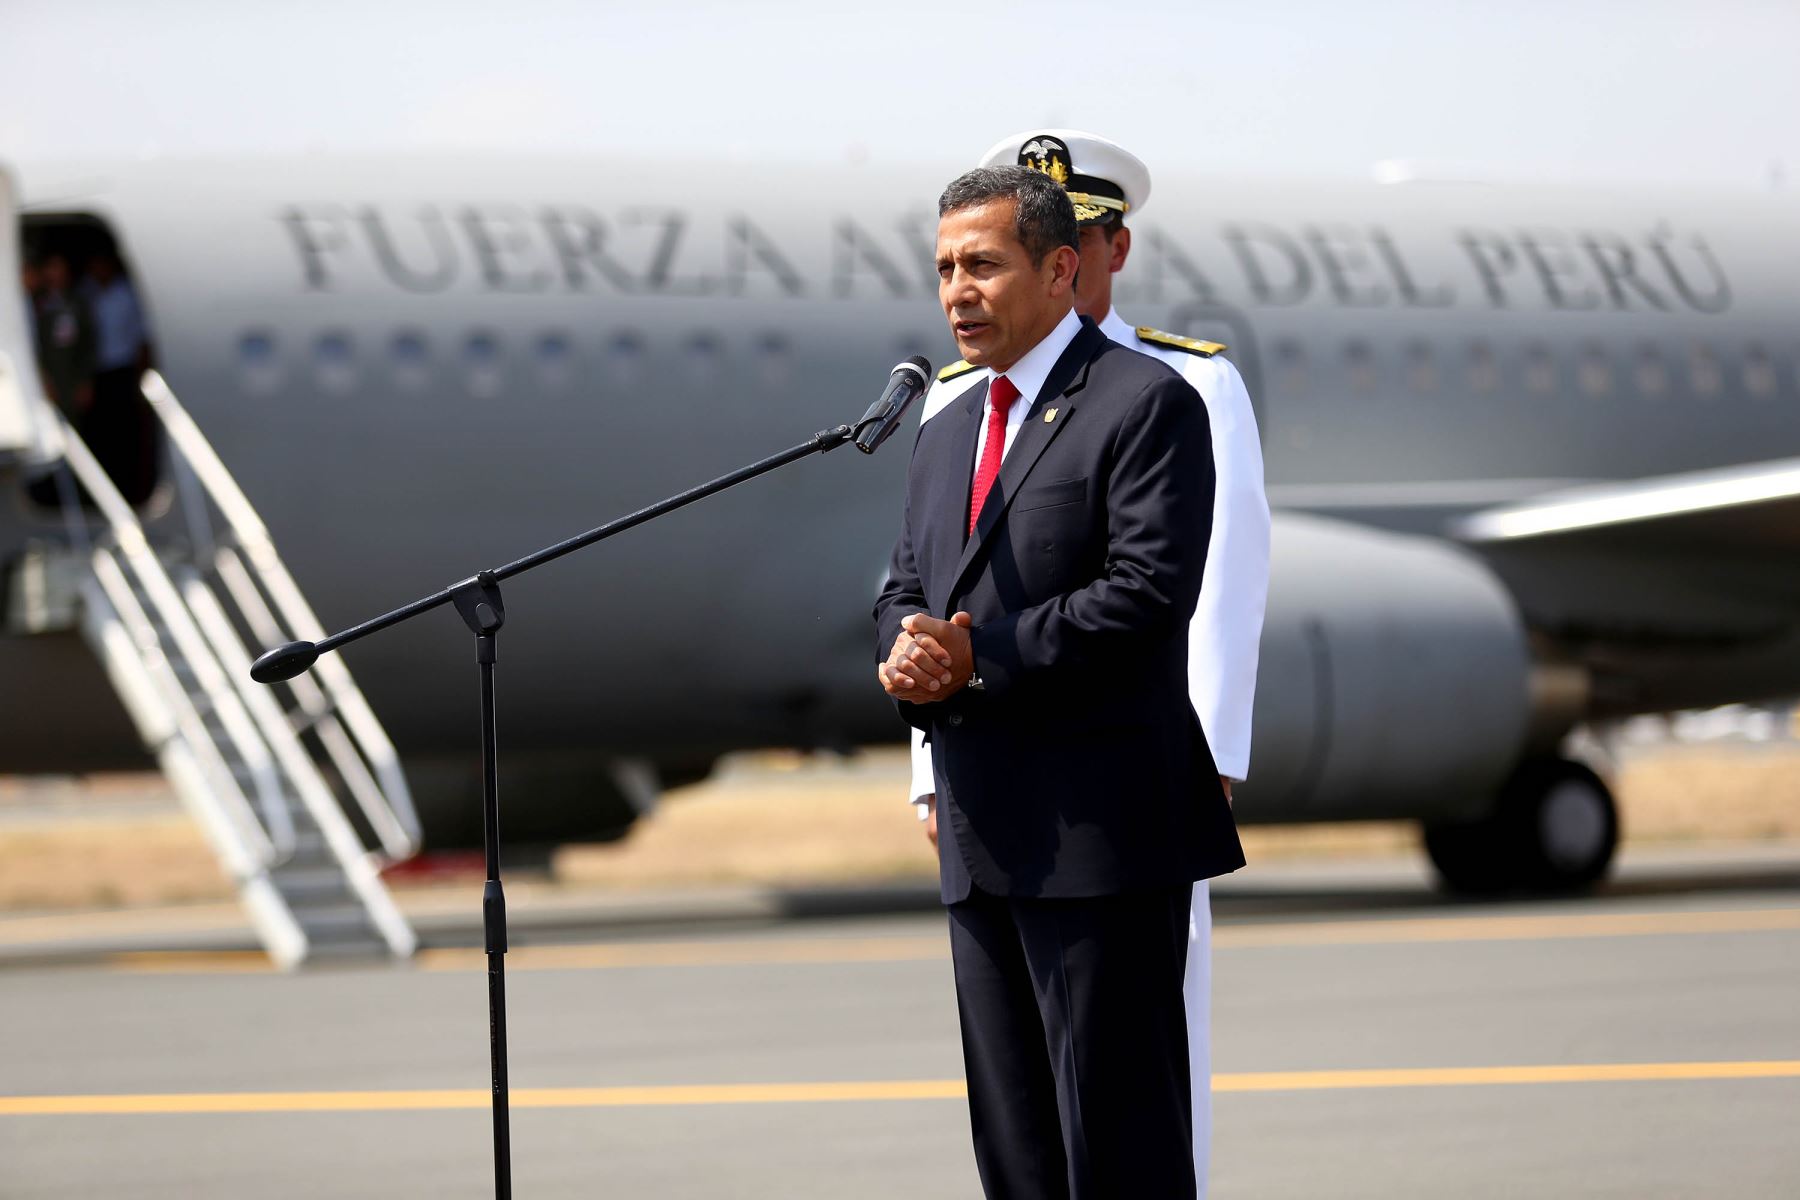 Jefe de estado Ollanta Humala,arriba al Aeropuerto Militar “Simón Bolívar” de Guayaquil (Ecuador) para participar en cumbre de UNASUR.Foto: ANDINA/Prensa Presidencia